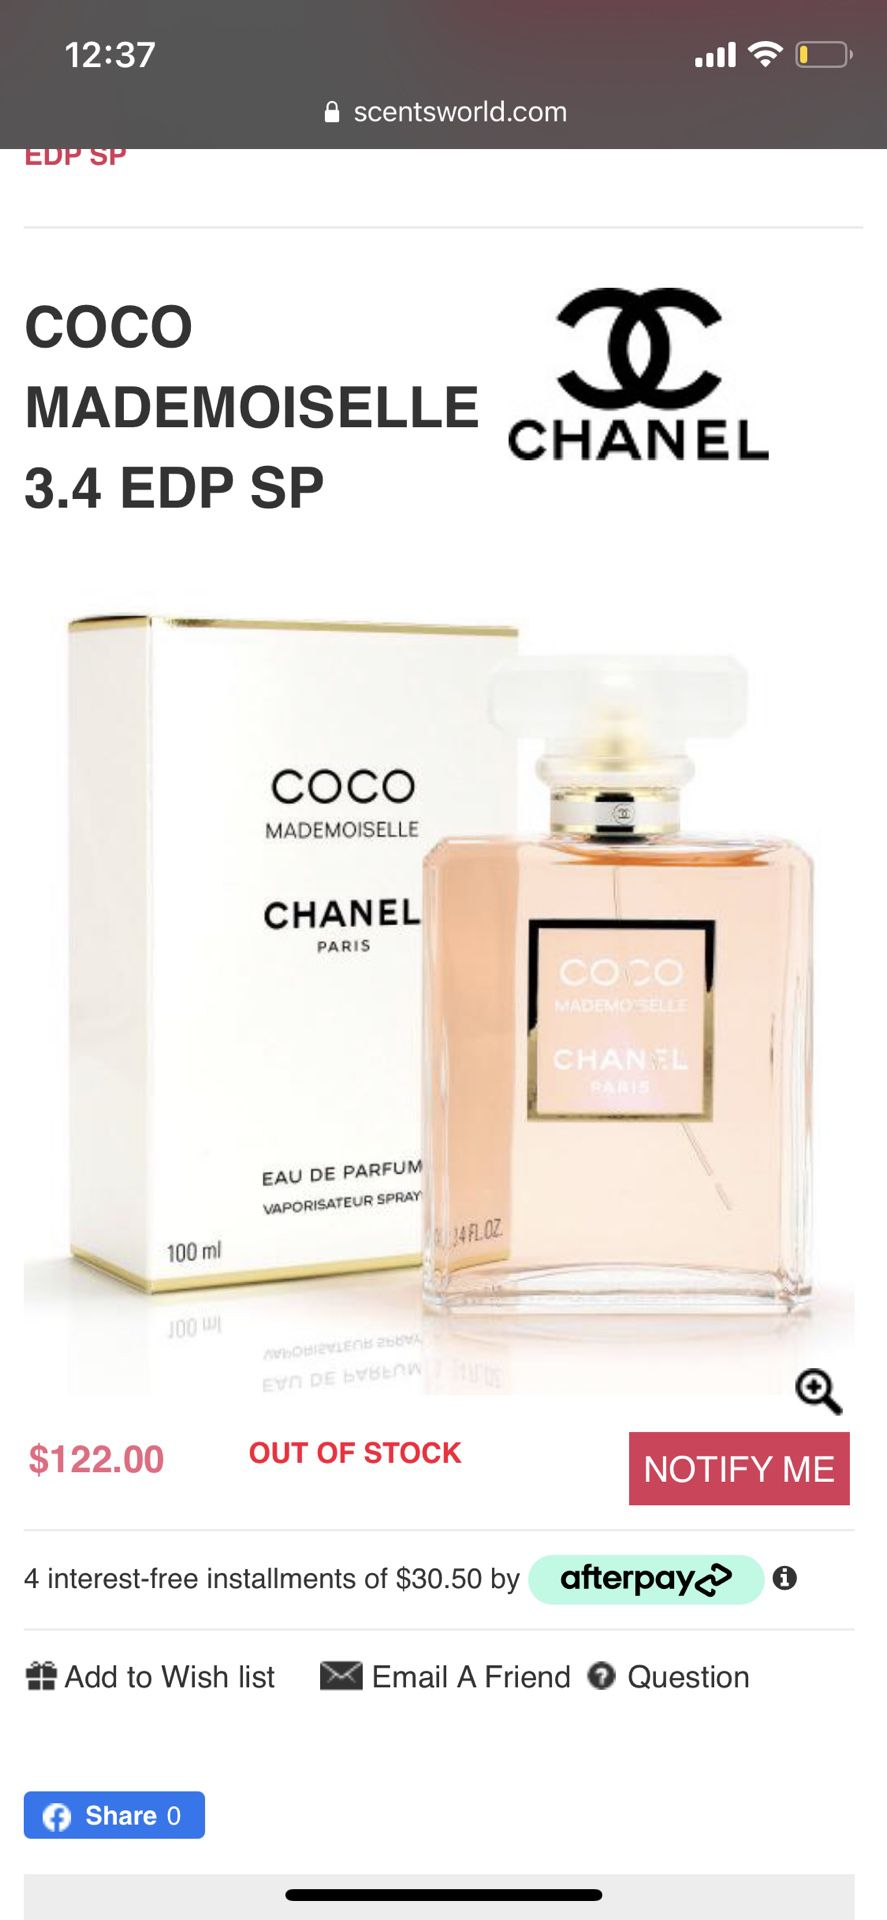 Chanel Paris Perfume